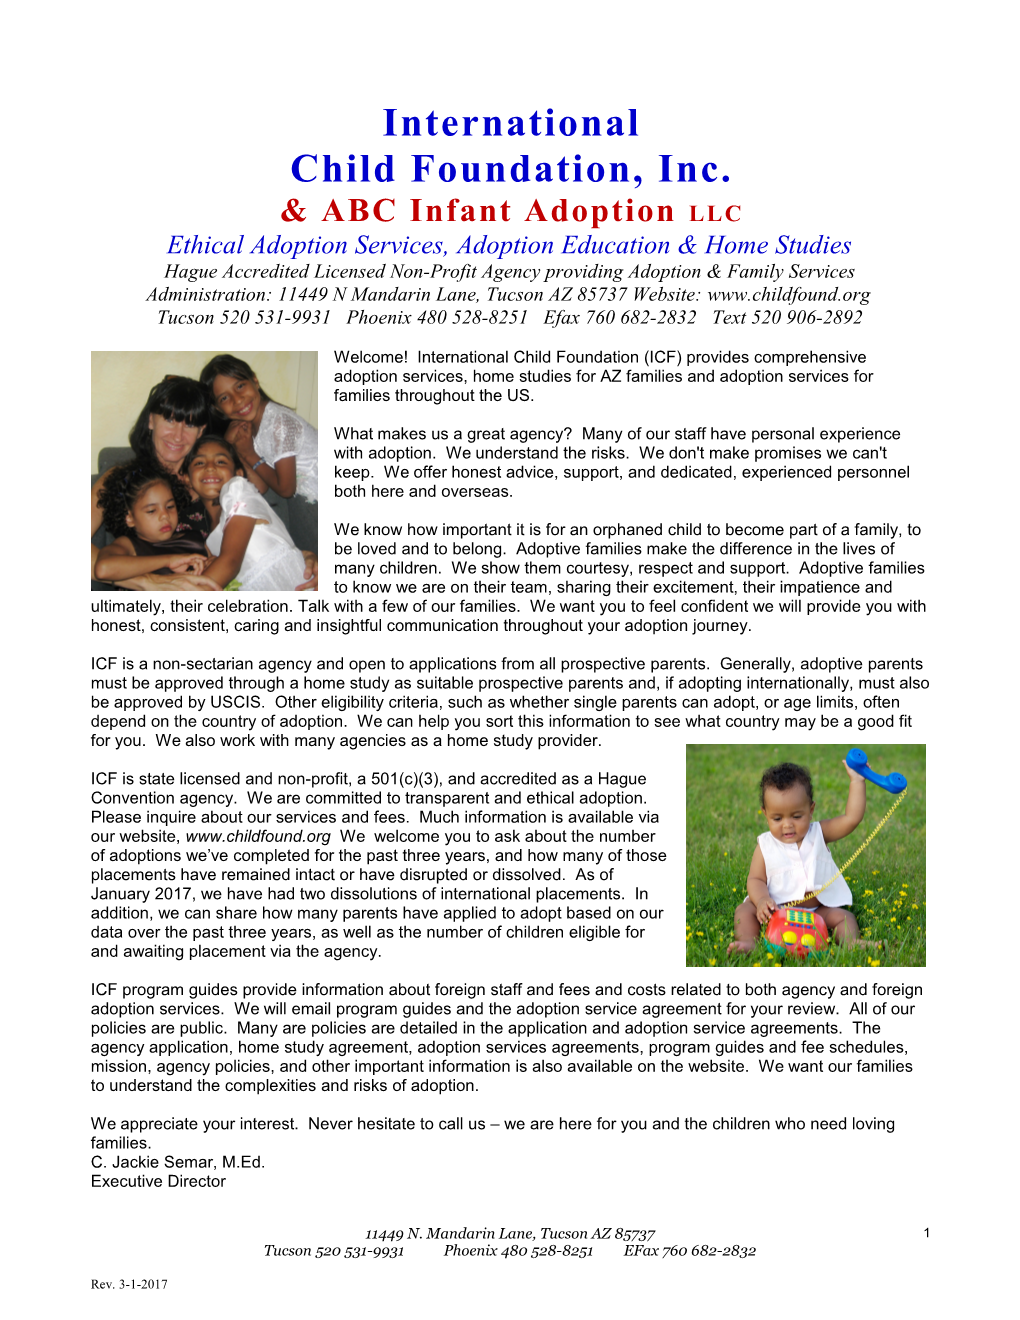 International Child Foundation, Inc